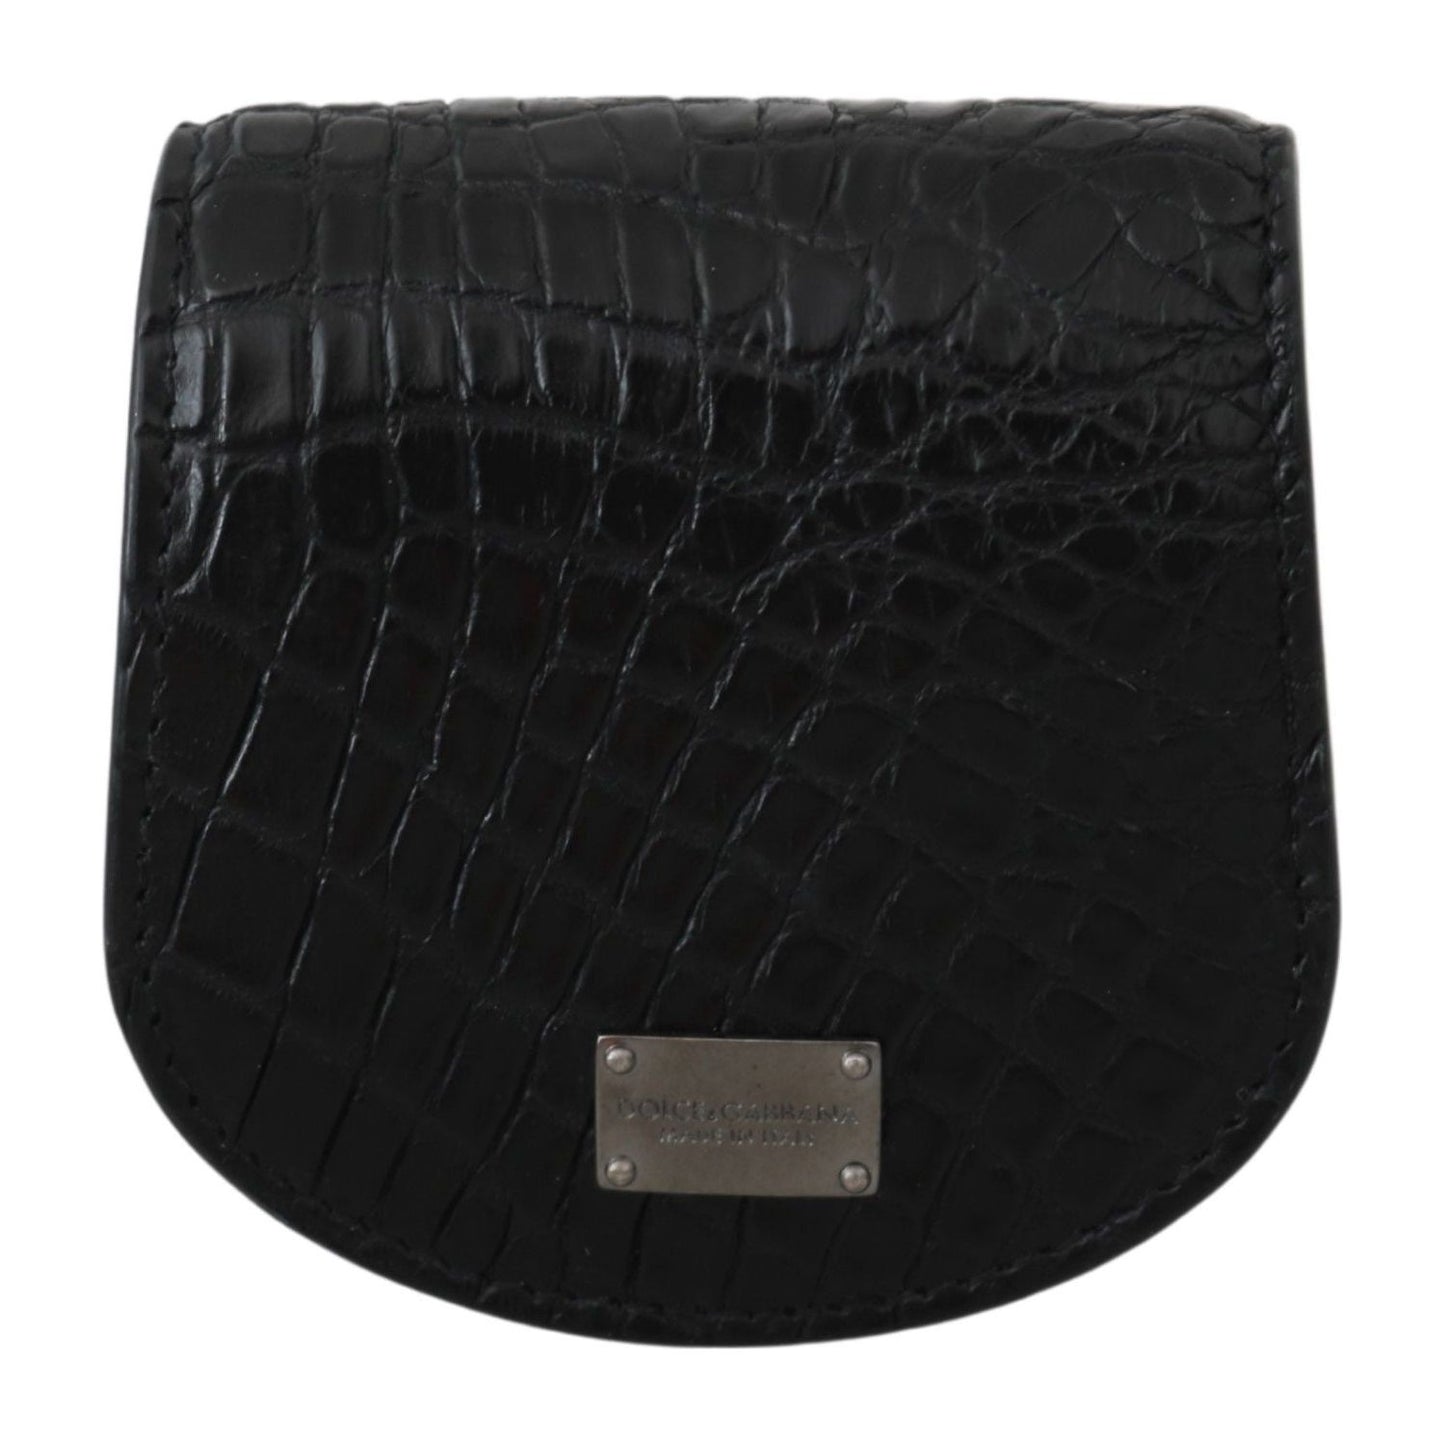 Dolce & Gabbana Sleek Black Leather Coin Case Wallet Condom Case black-exotic-skin-pocket-condom-case-holder IMG_0229-0a8e0684-7e6.jpg